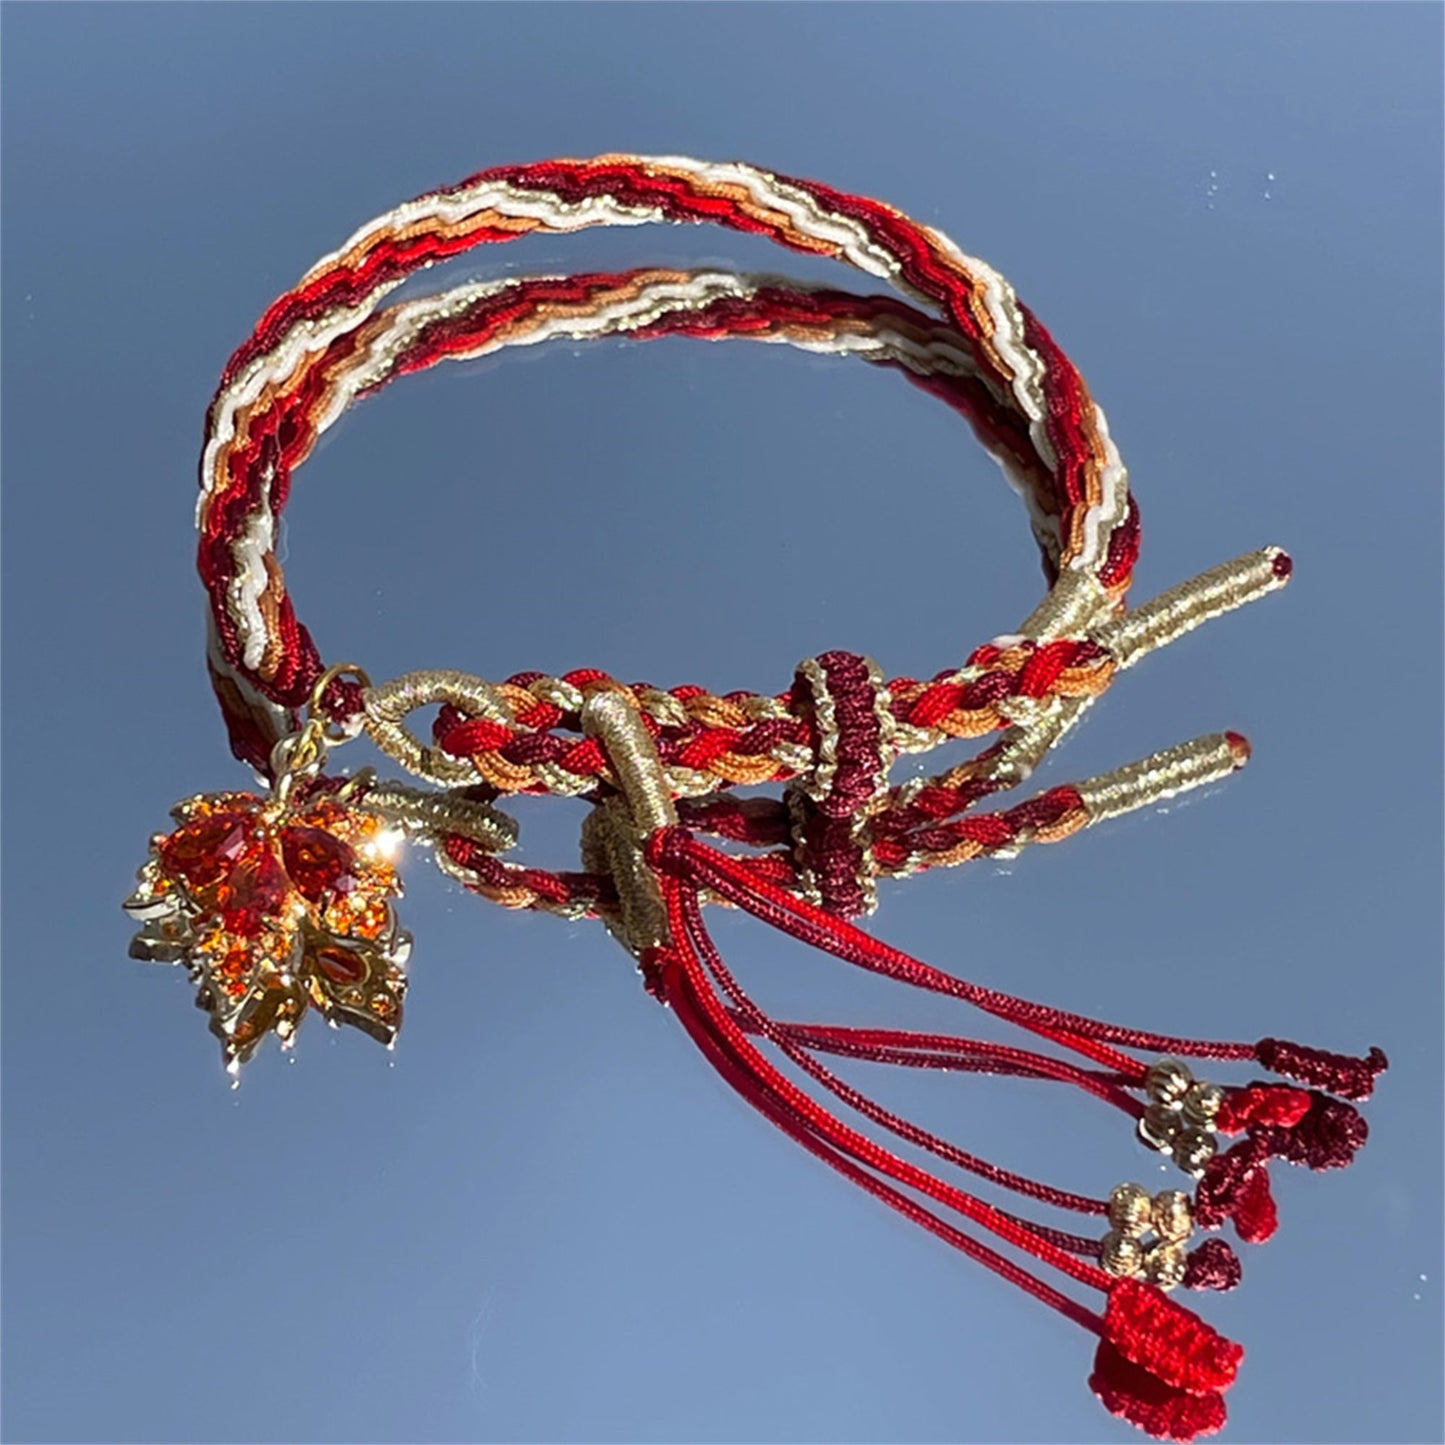 Genshin Wriotheley Bracelet Hand-Woven Bracelet